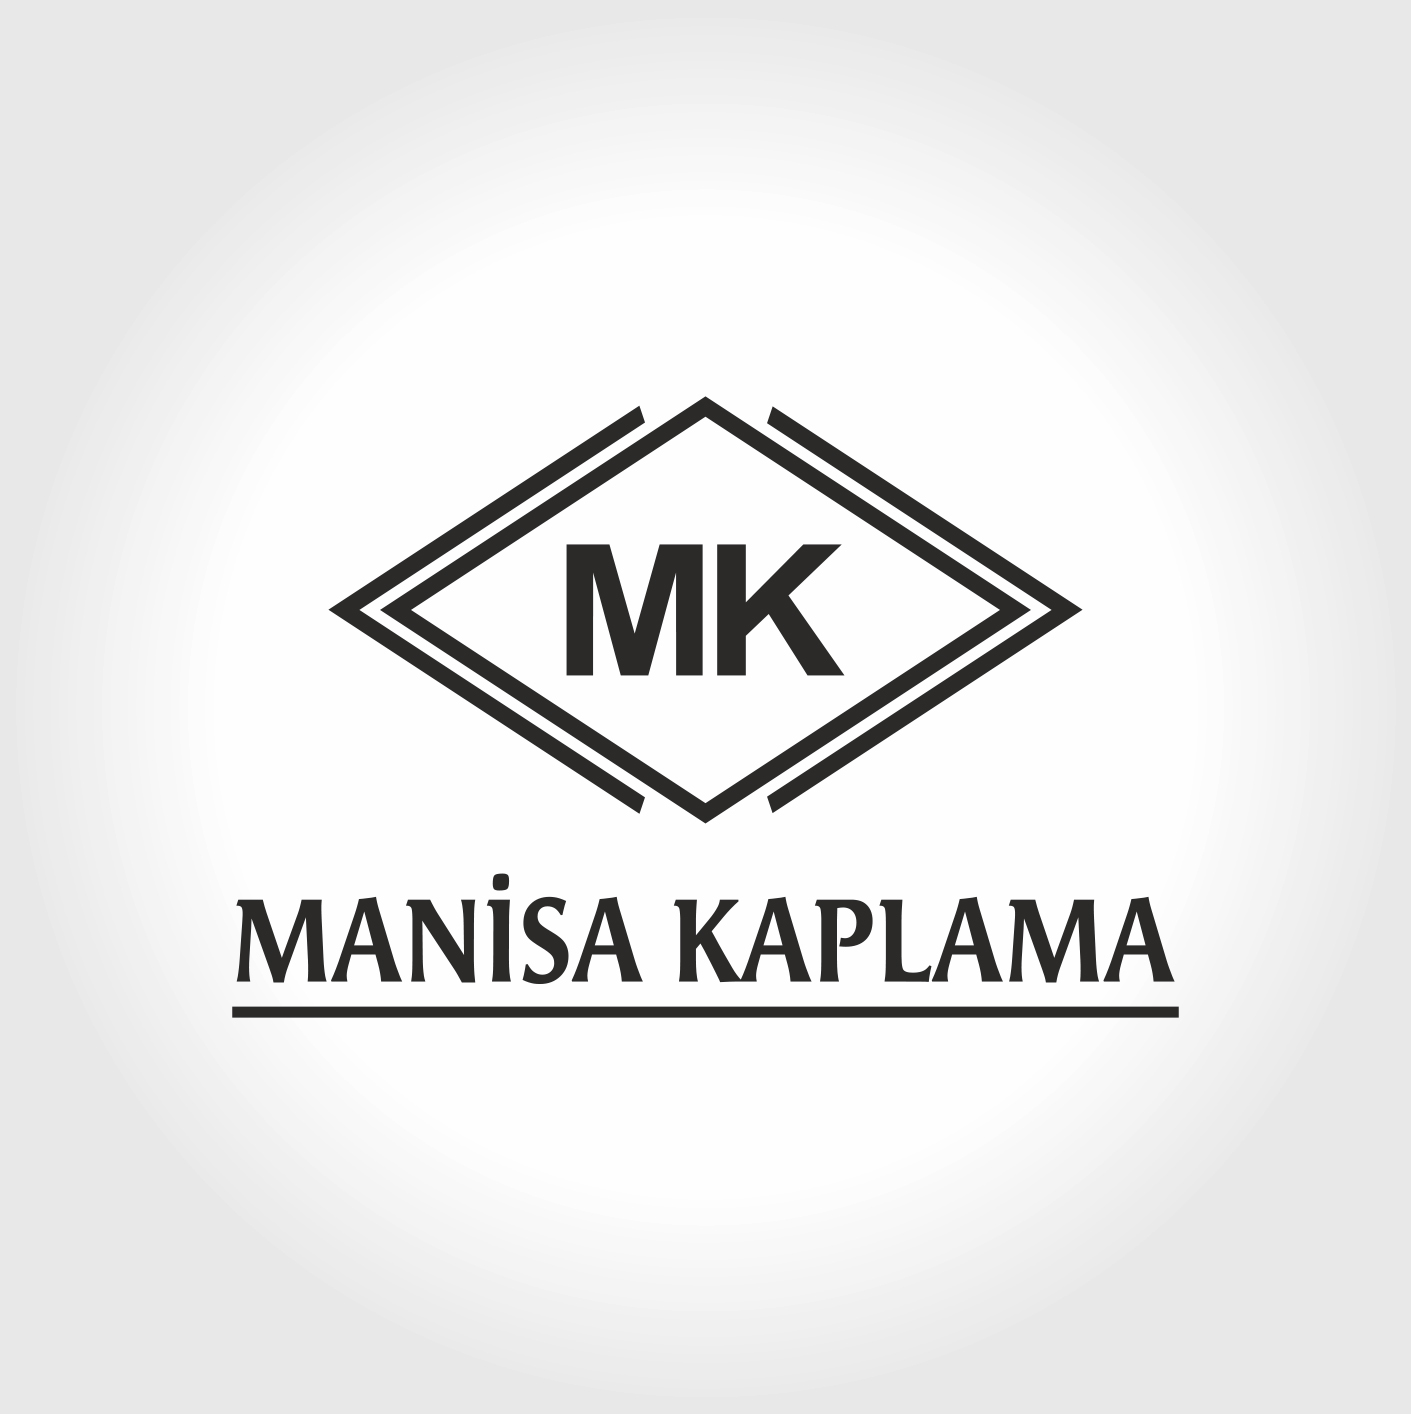 Manisa Kaplama